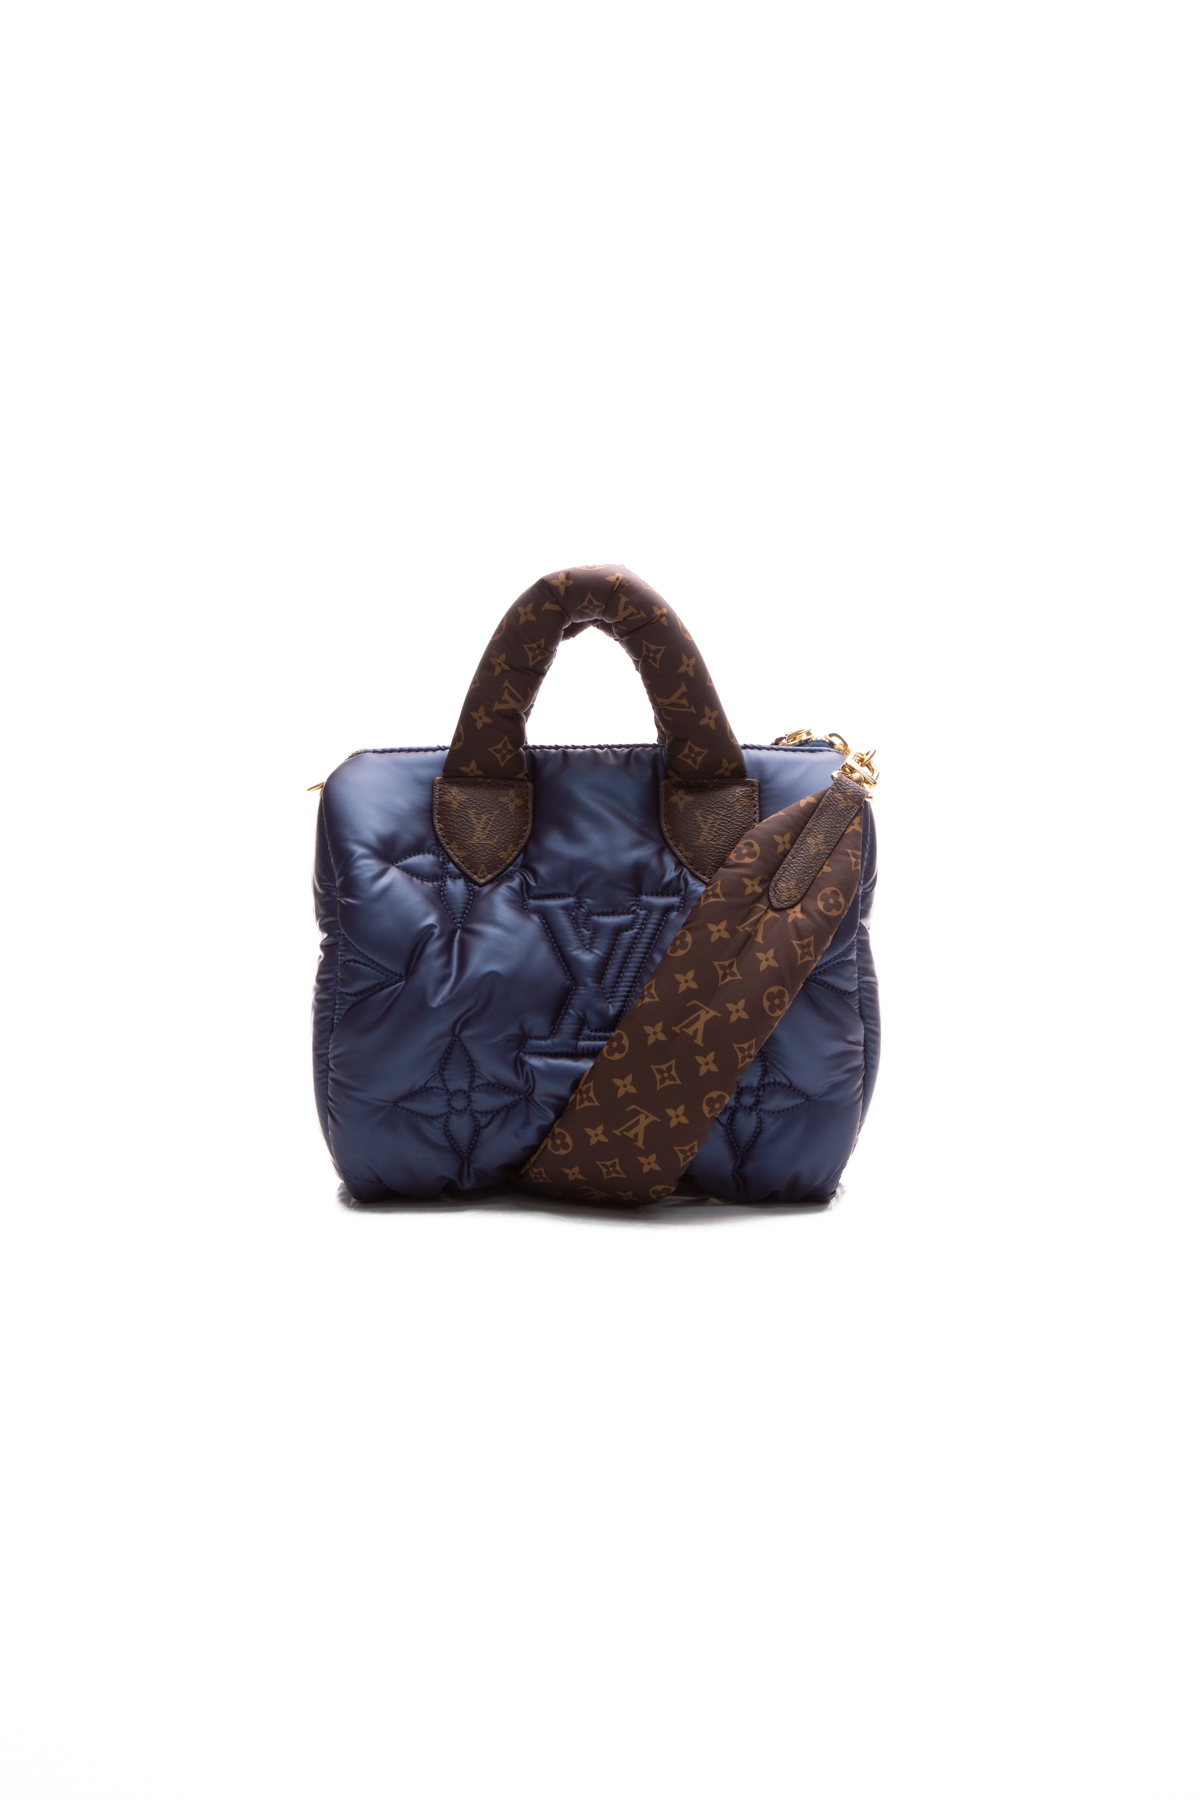 Louis Vuitton Pillow Speedy 25 Bandouliere Bag - Couture USA